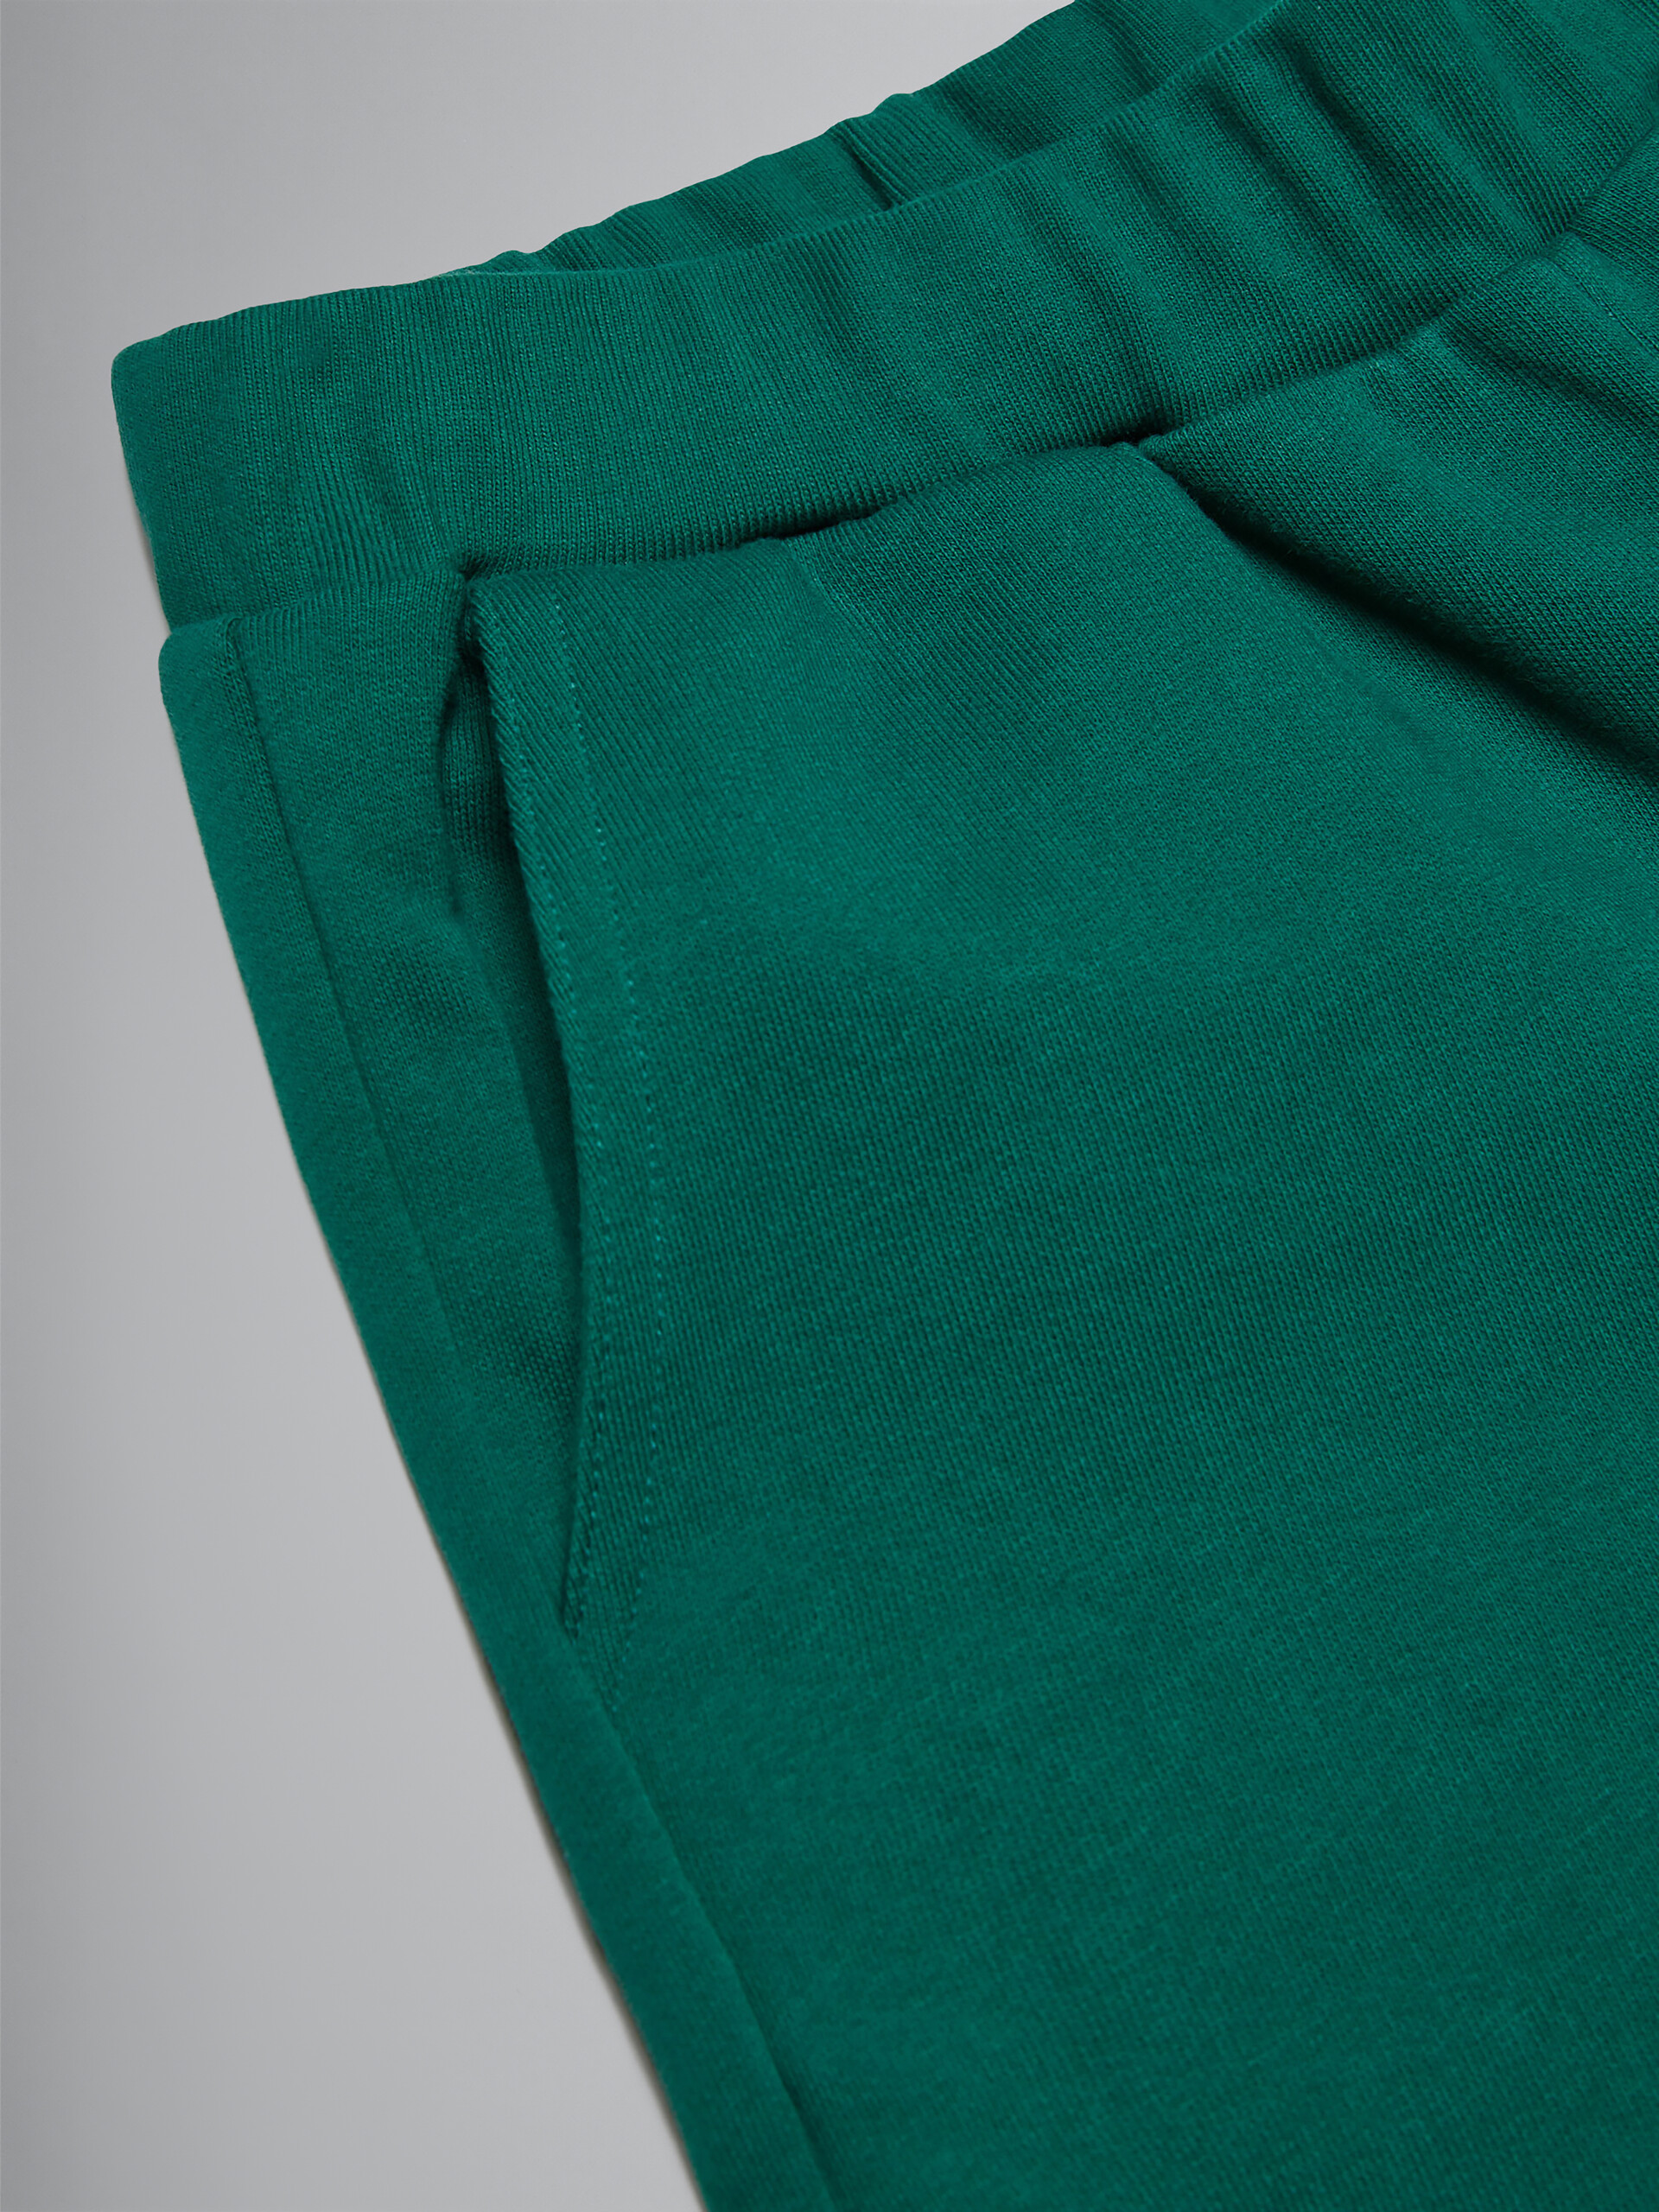 Green fleece shorts with logo - Pants - Image 3